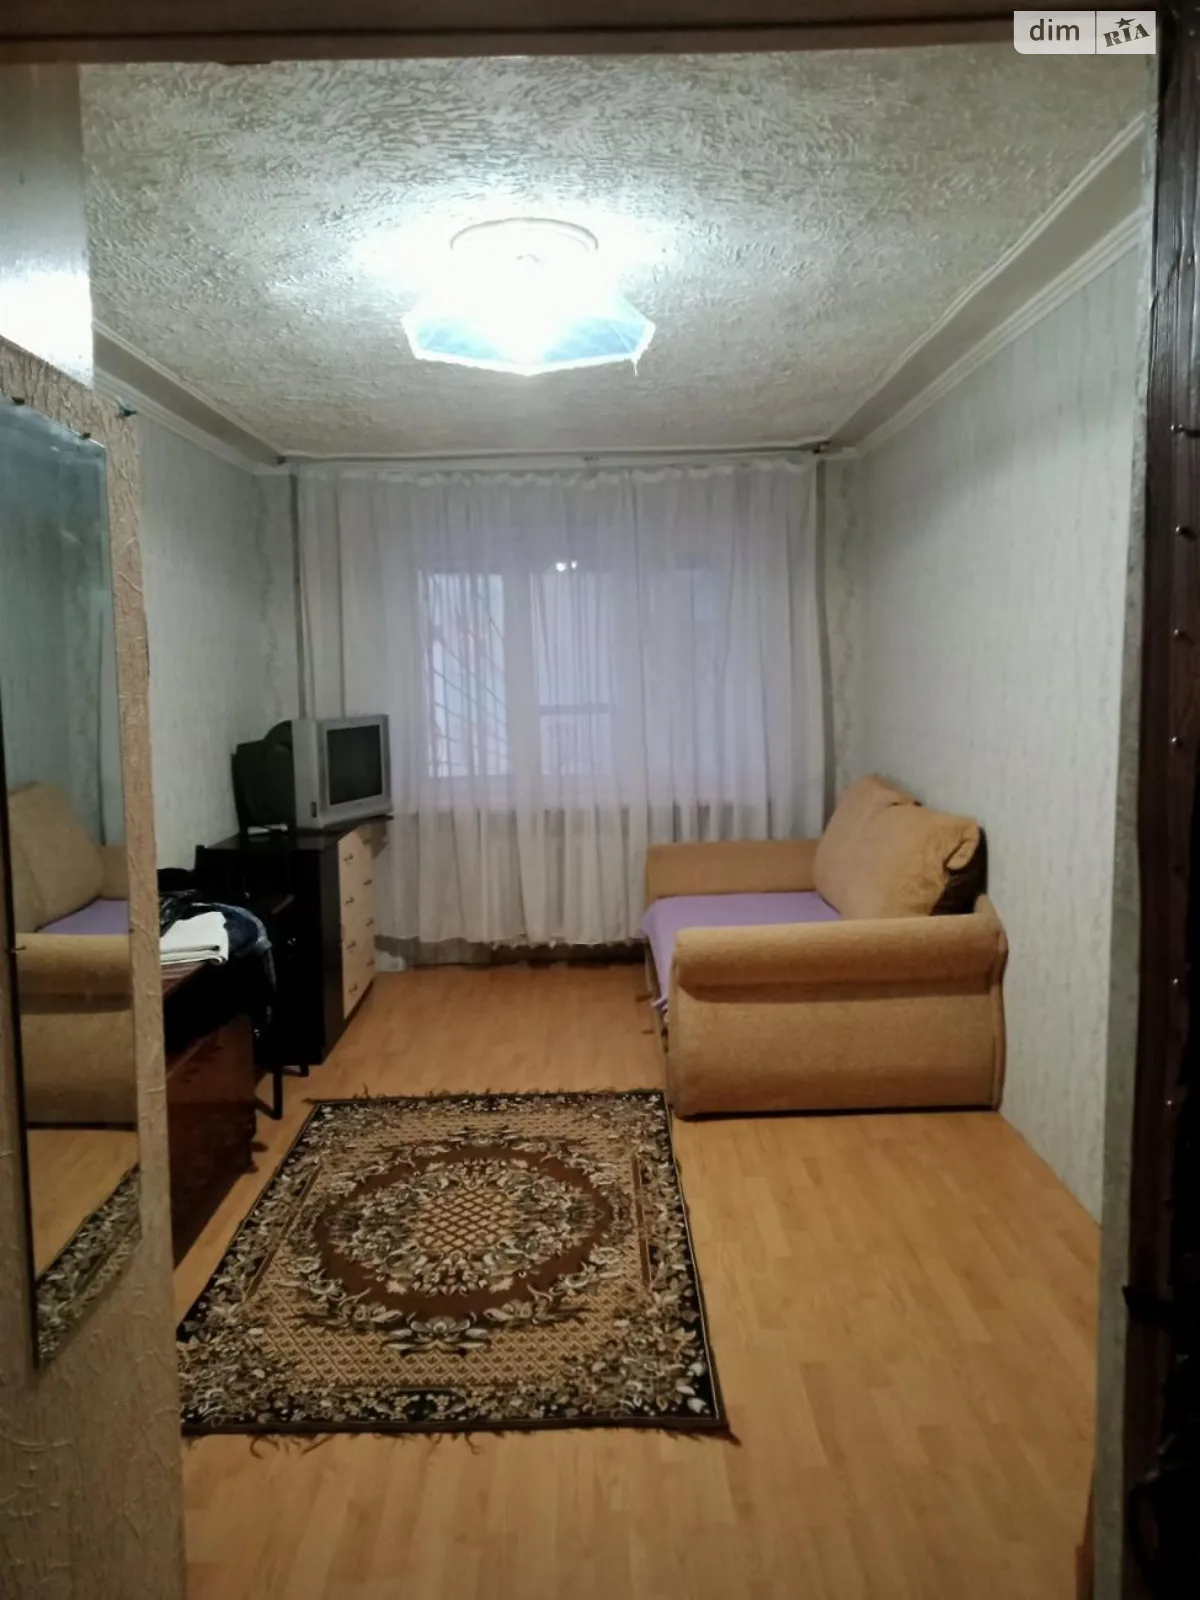 Продается комната 98 кв. м в Одессе, цена: 6500 $ - фото 1